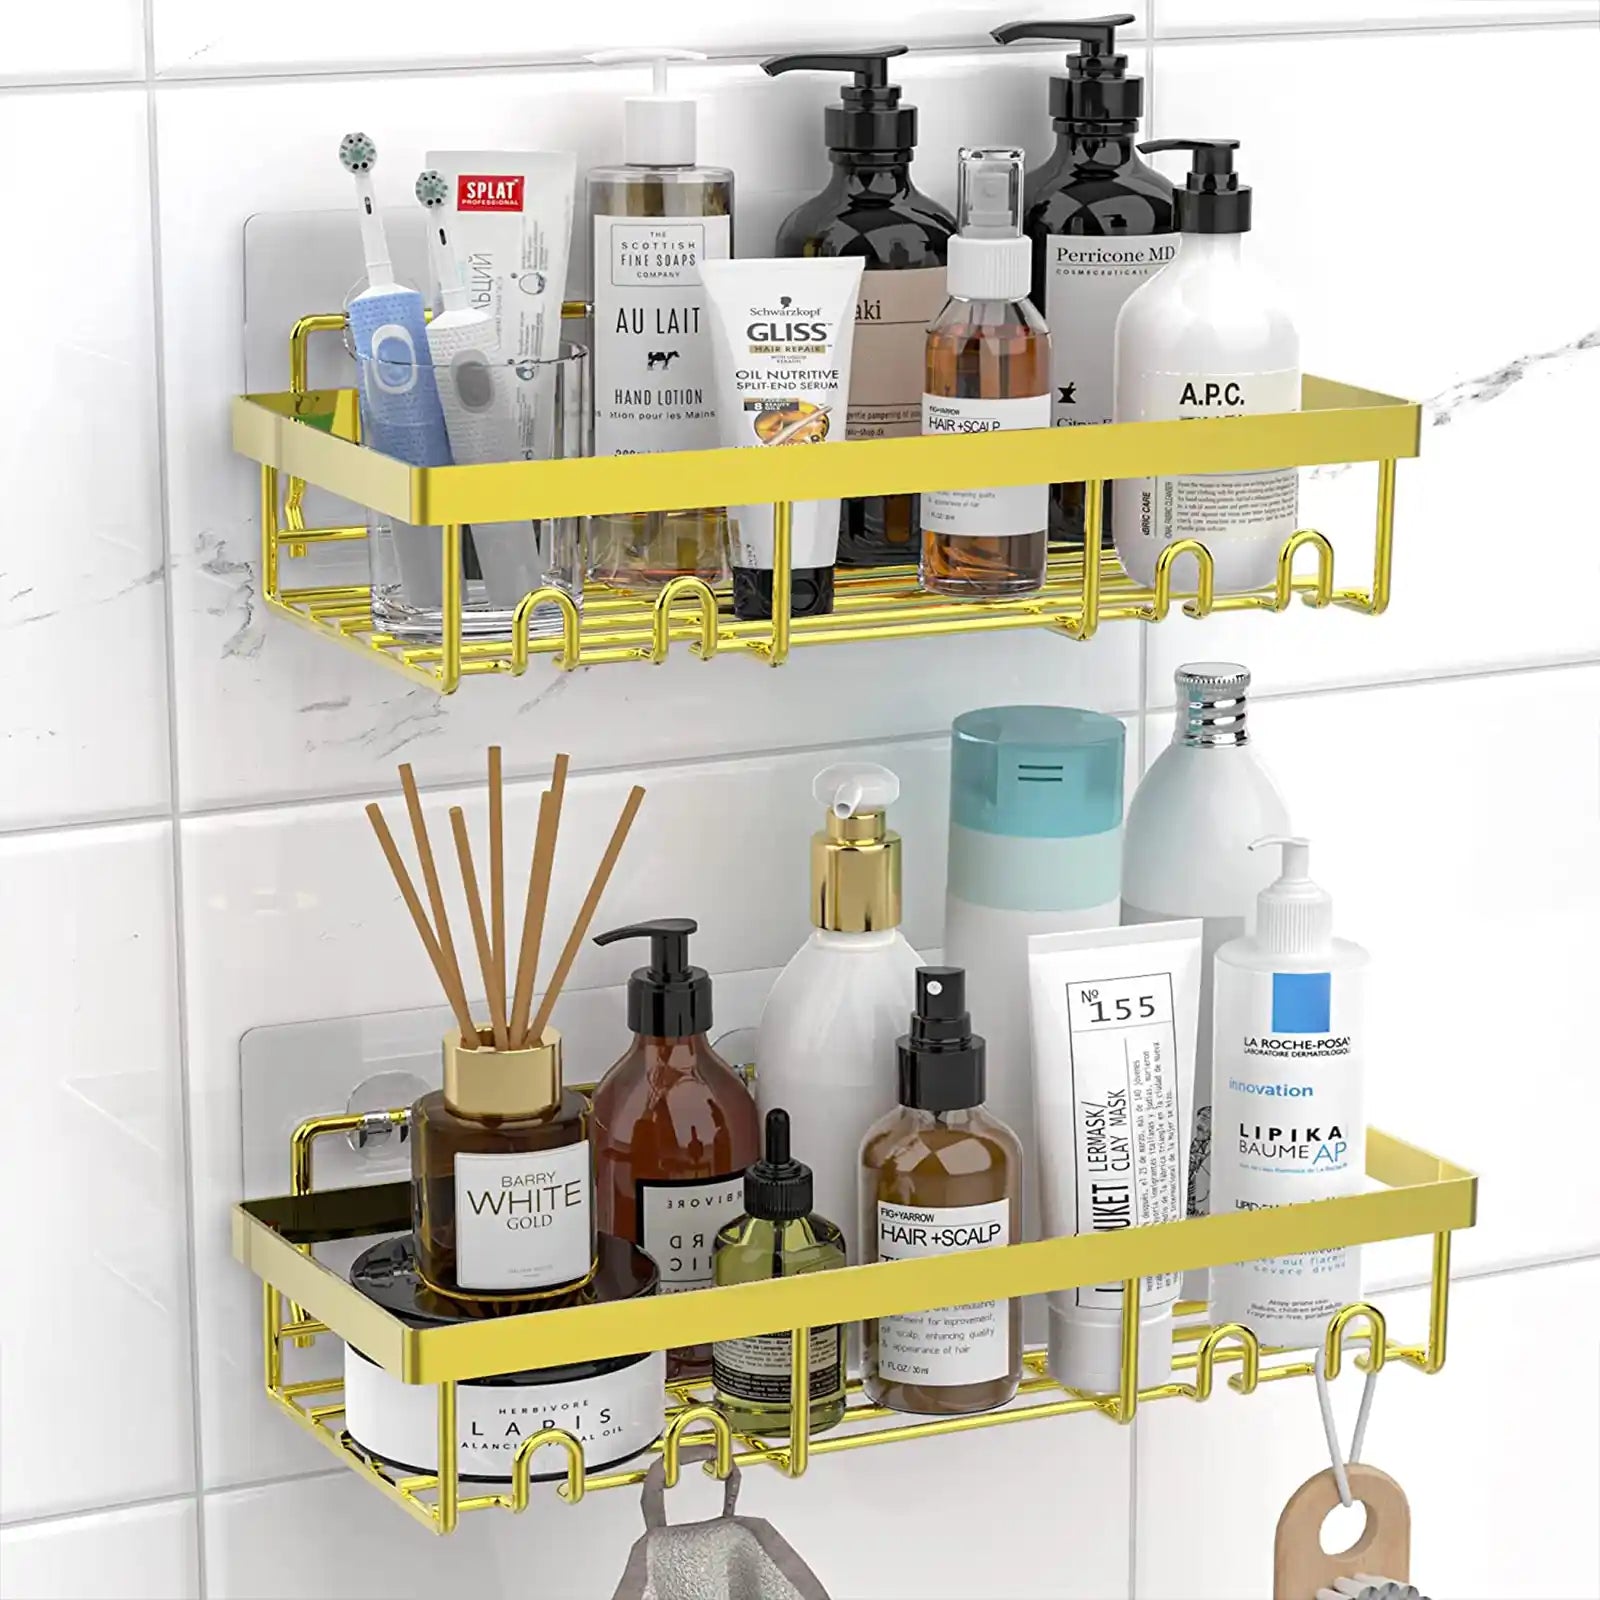 2 Pack Shower Caddy Shelf Organizer Rack, Bathroom Gadgets Accessories Decor, Household Essentials, Self Adhesive Shelves Organization and Storage